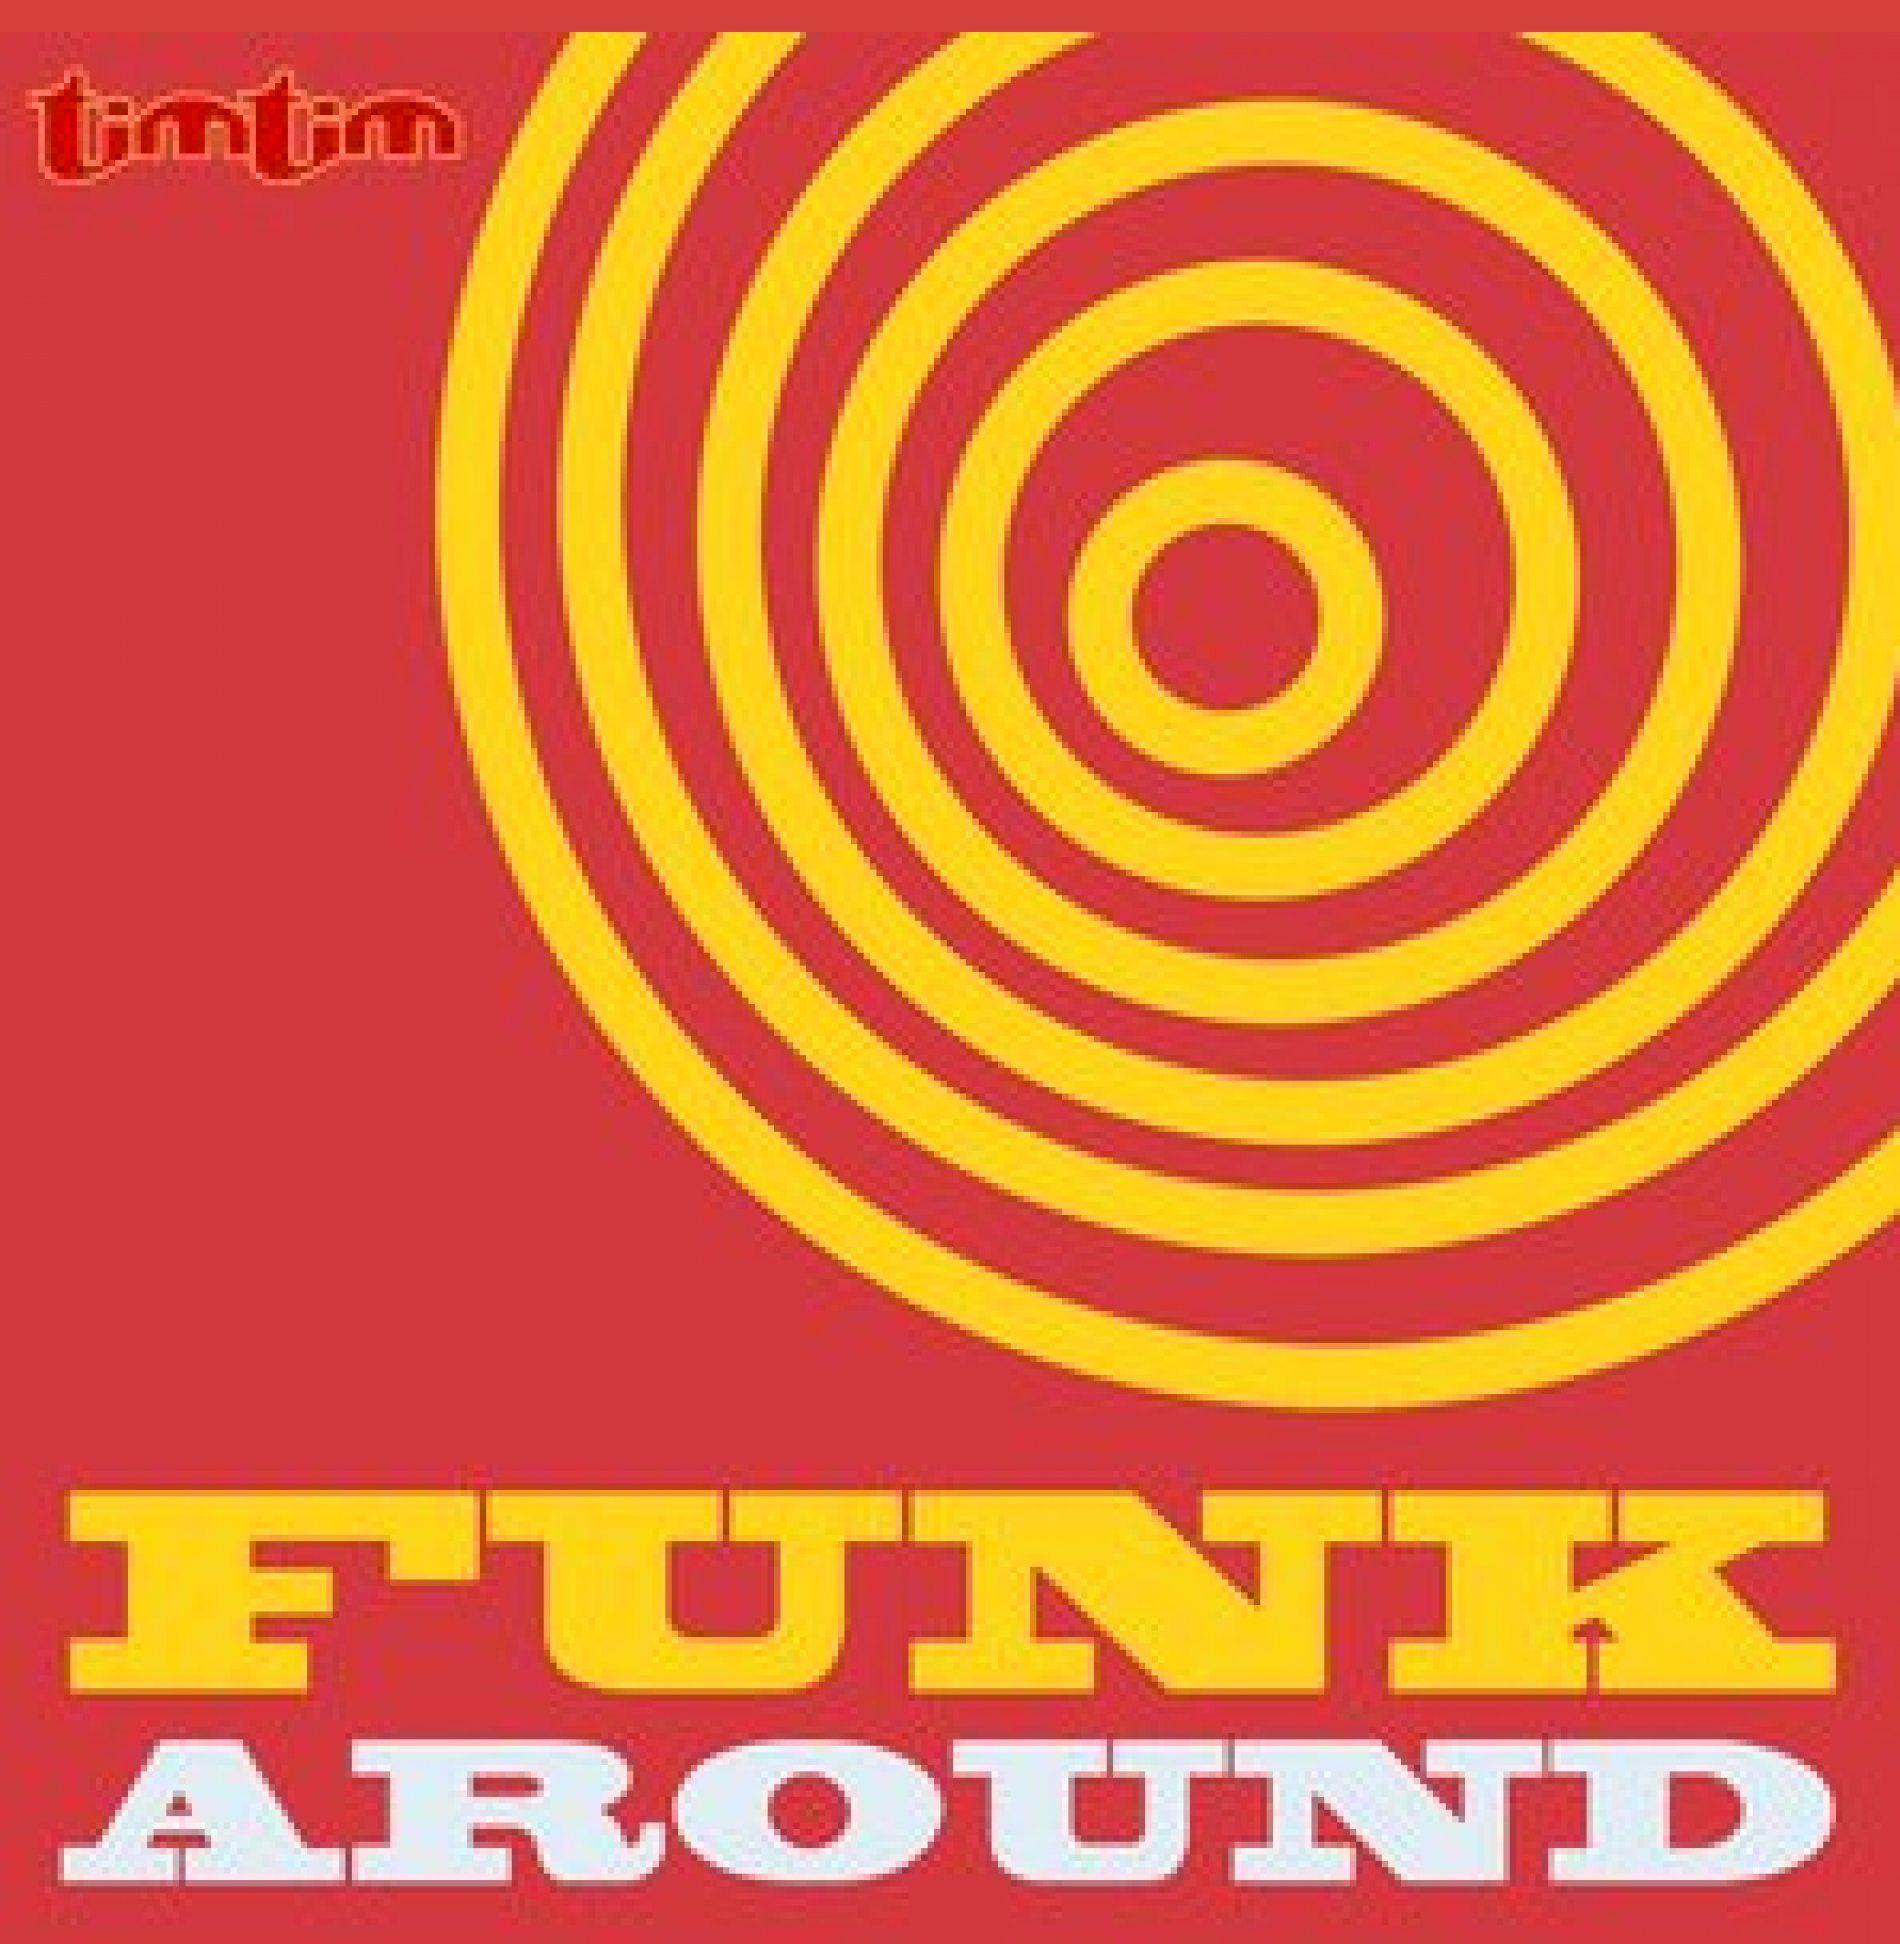 Tim Tim: Funk Around